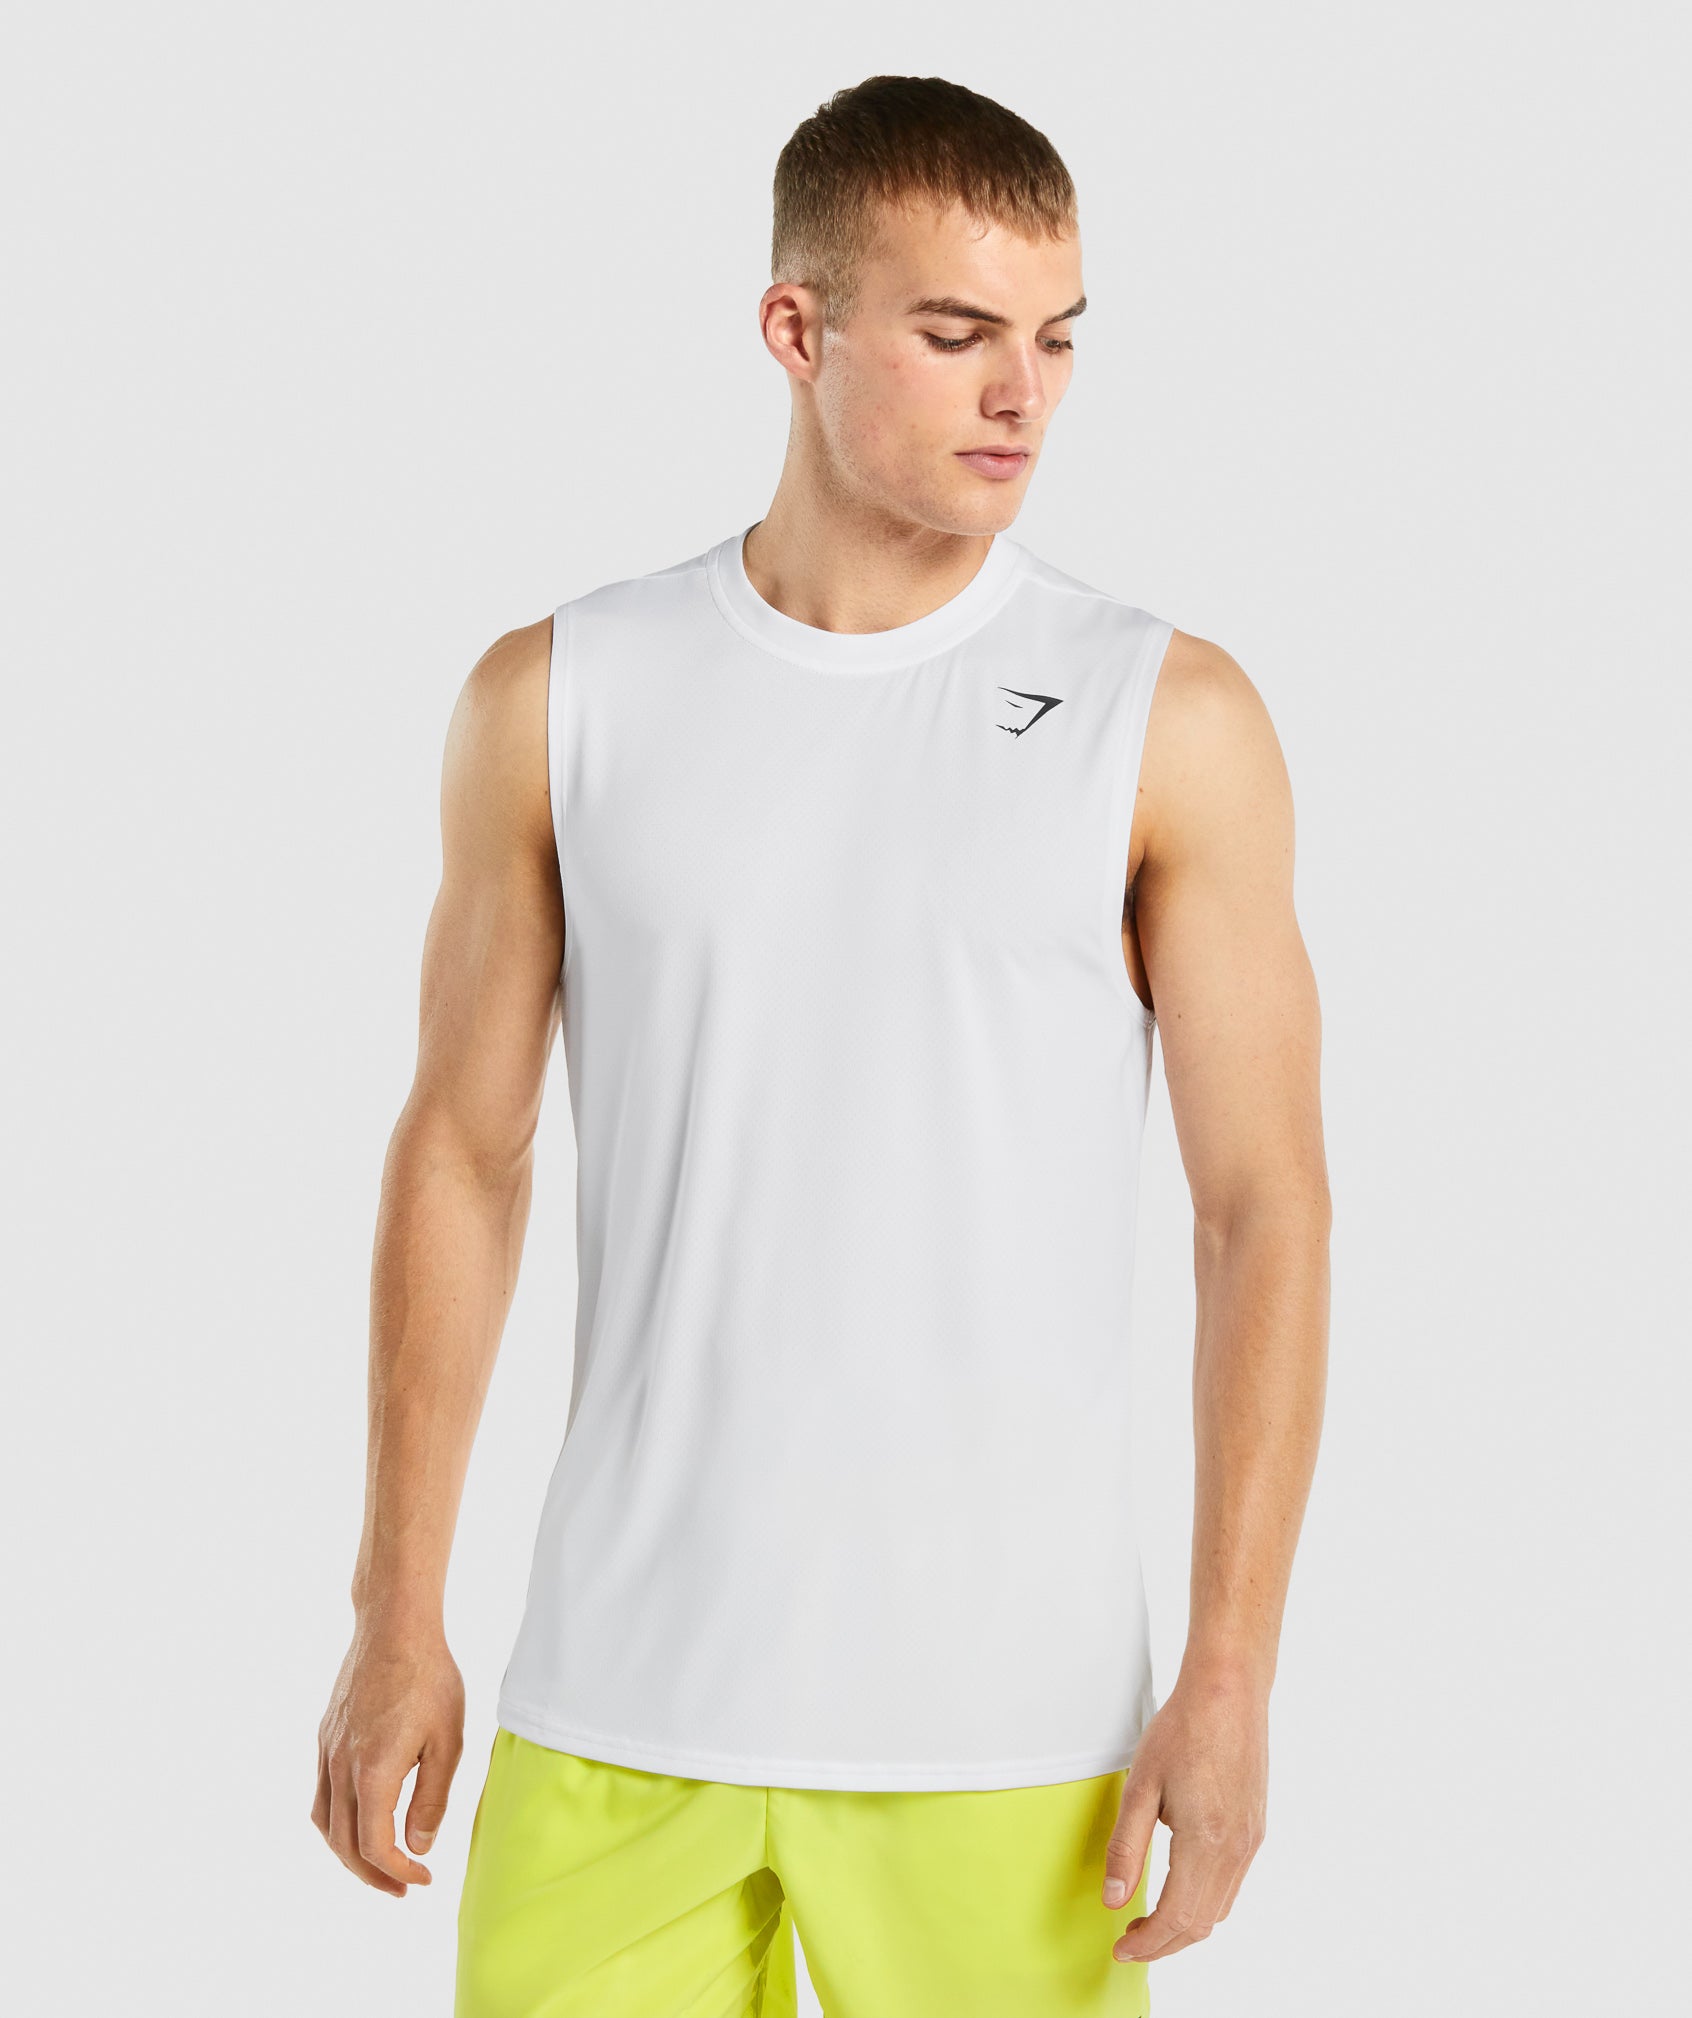 Gymshark Mens XL Arrival Graphic T-Shirt Navy Blue Slim Fit Short